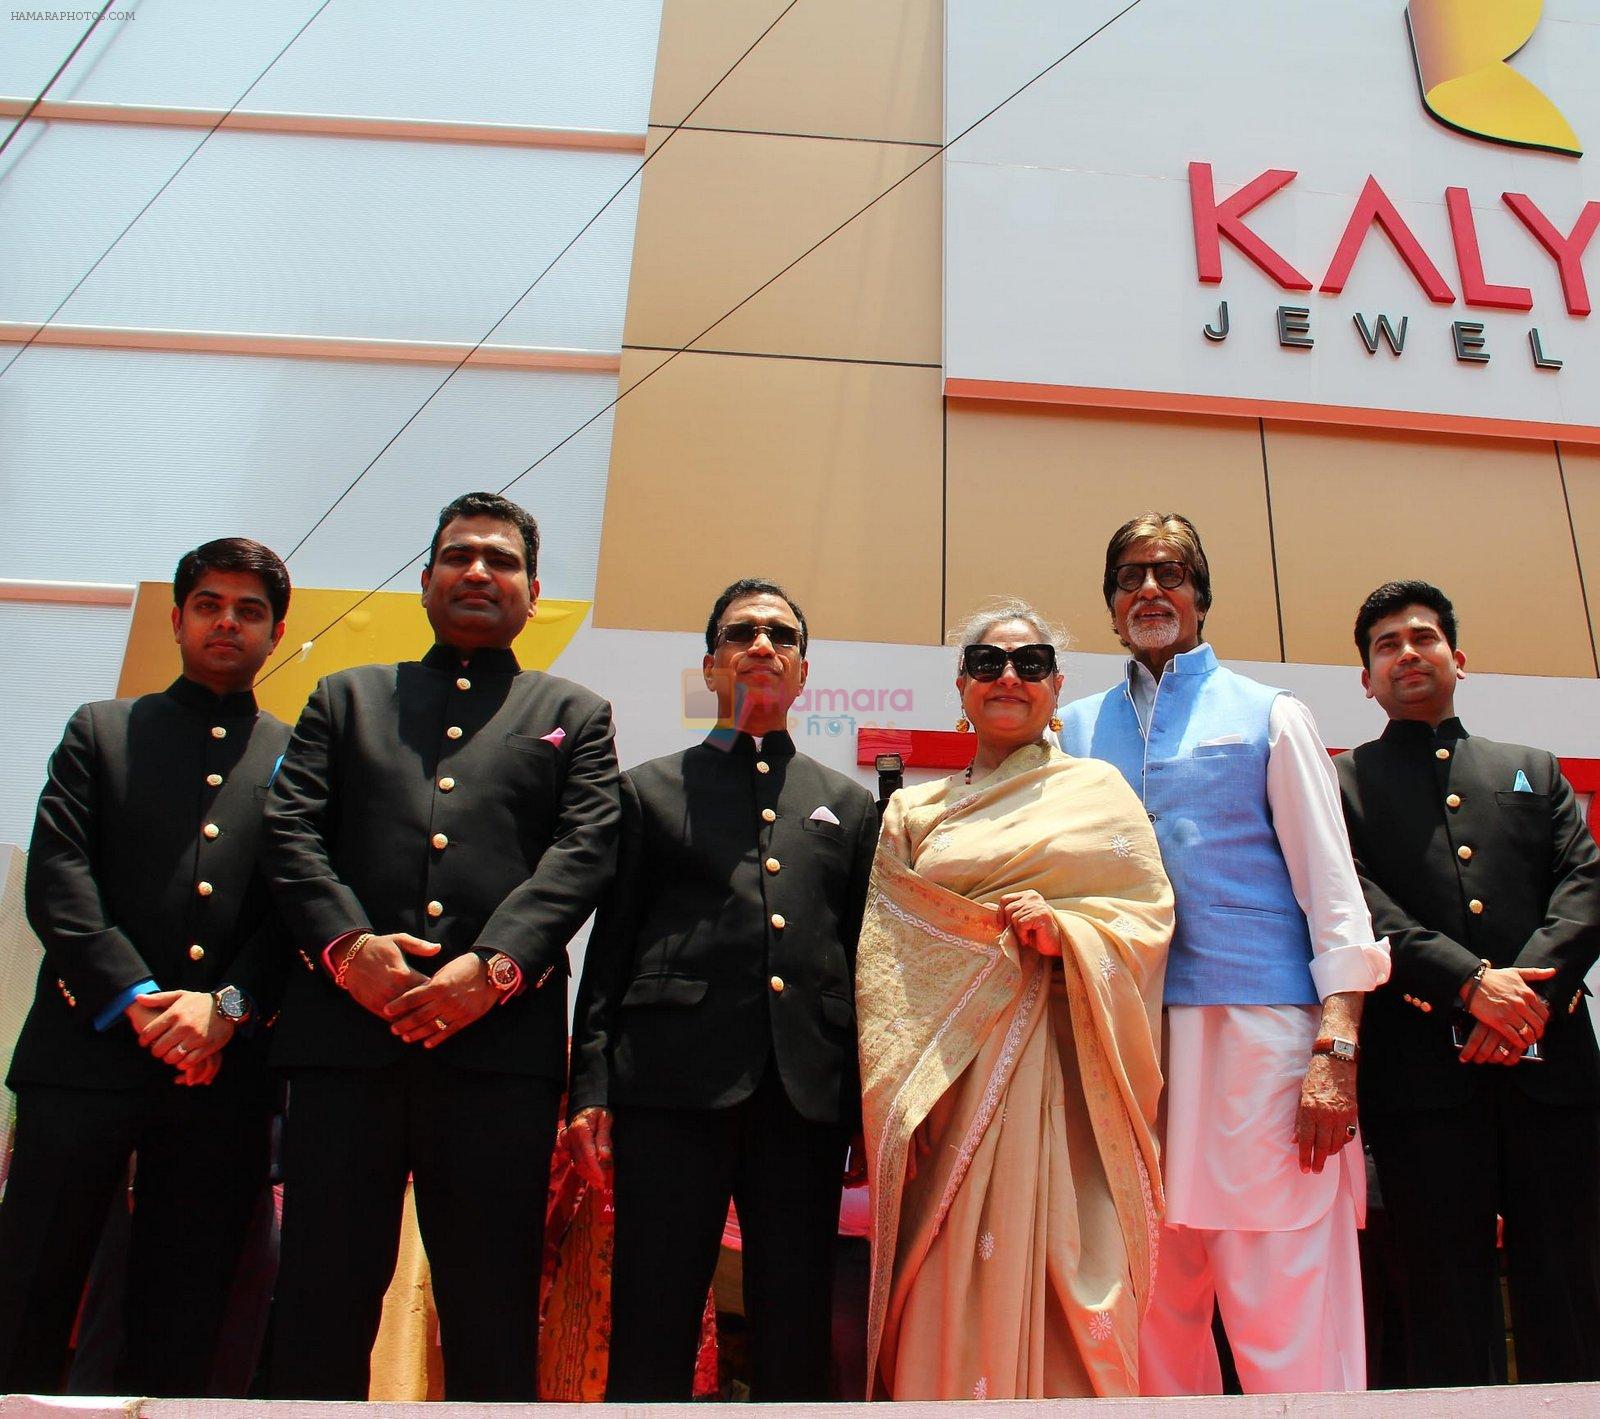 Amitabh Bachchan and Jaya Bachchan in Kolkatta for Kalyan jewellers on 9th May 2016